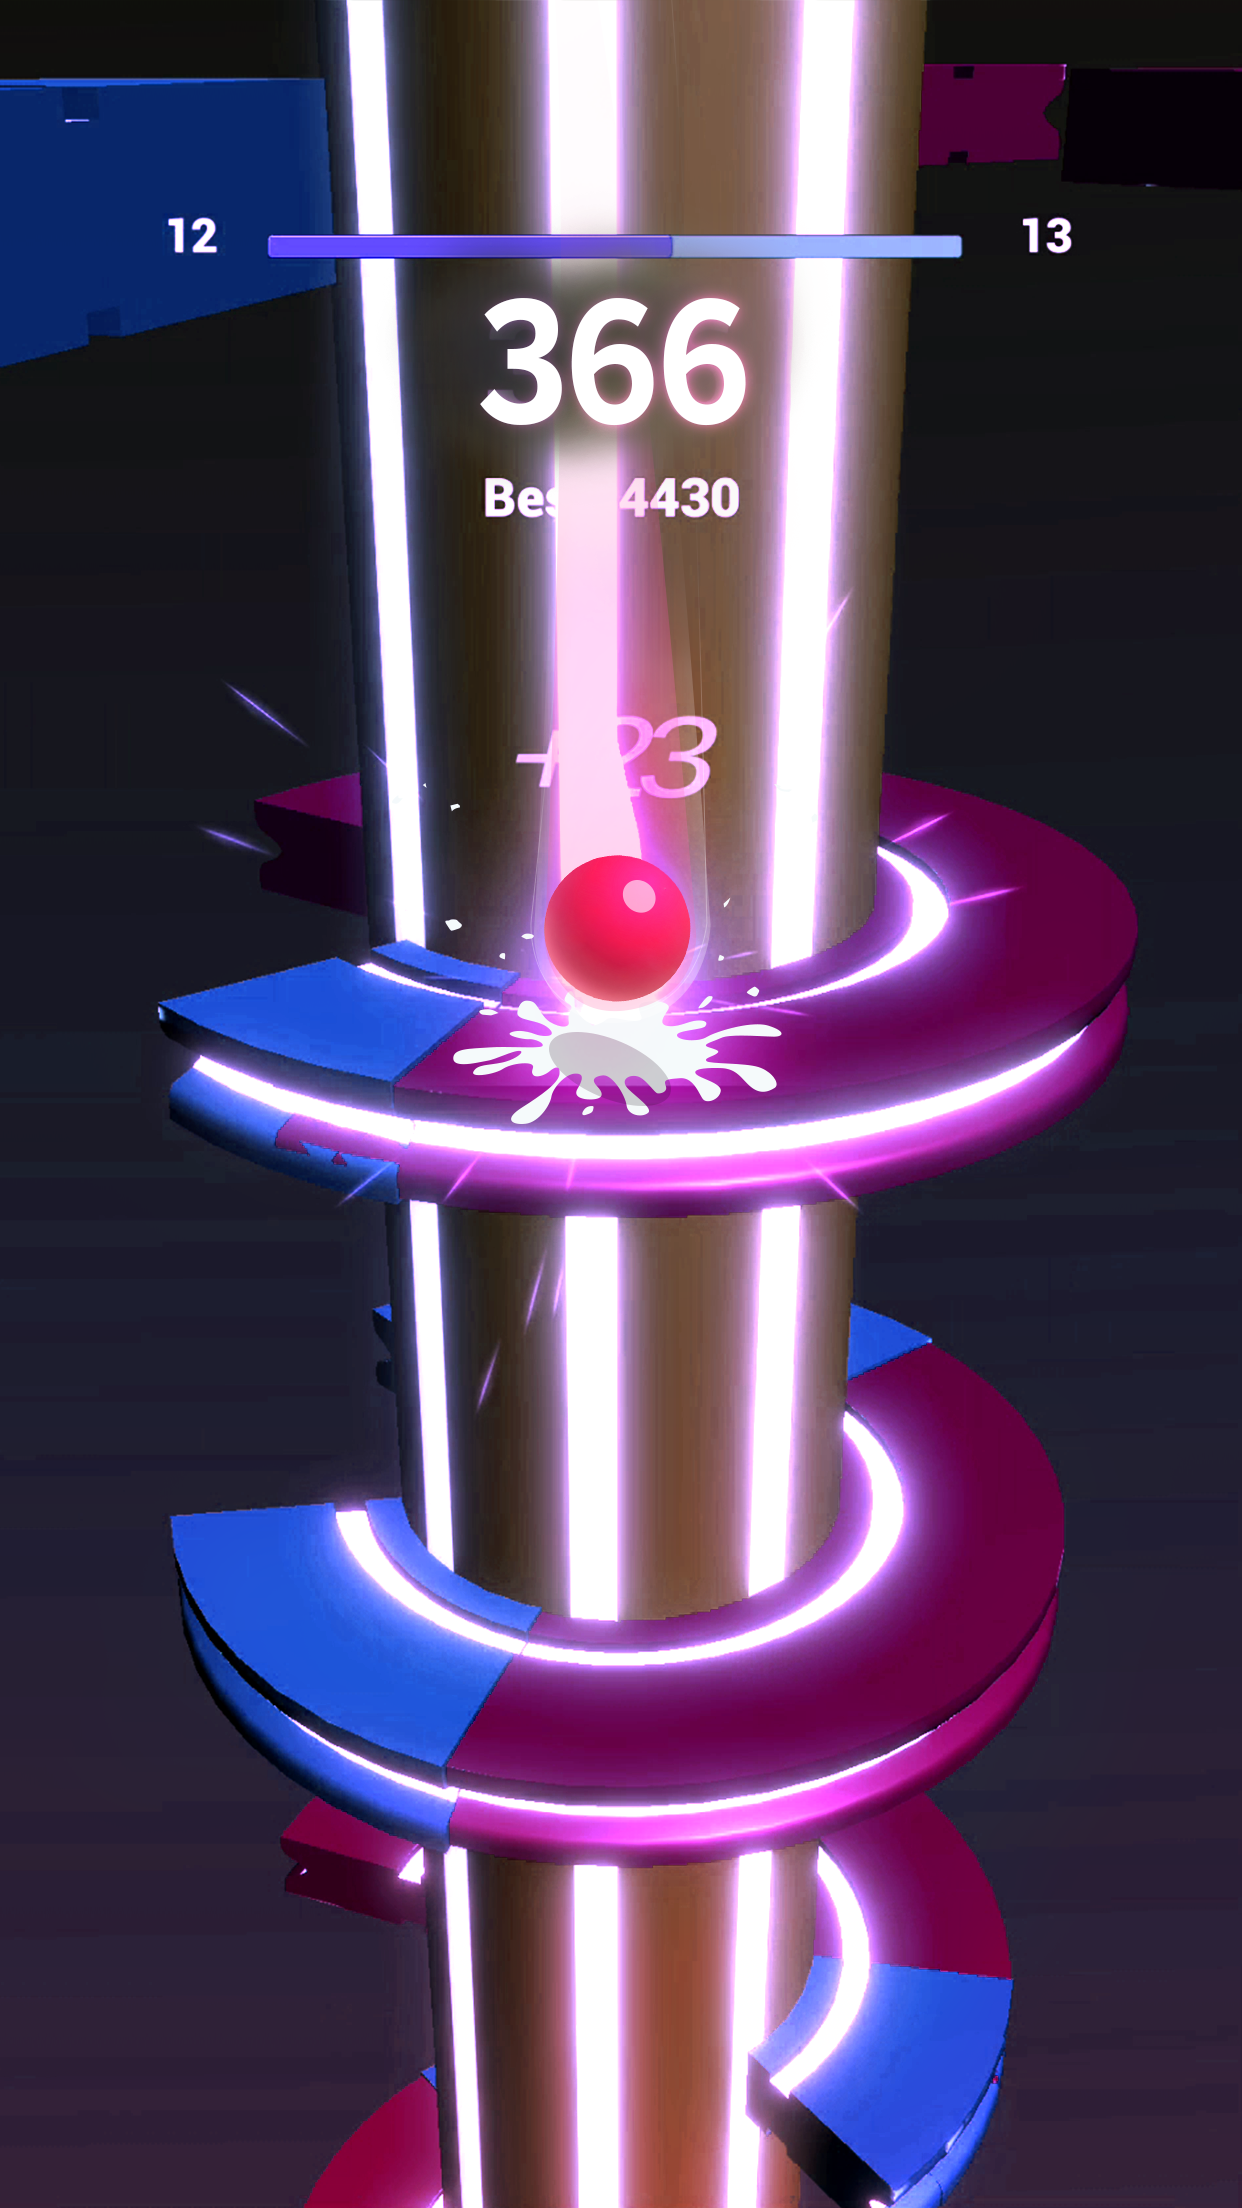 Screenshot 1 of Helix Color Jump 2018 - Juego de caída de bolas 1.1